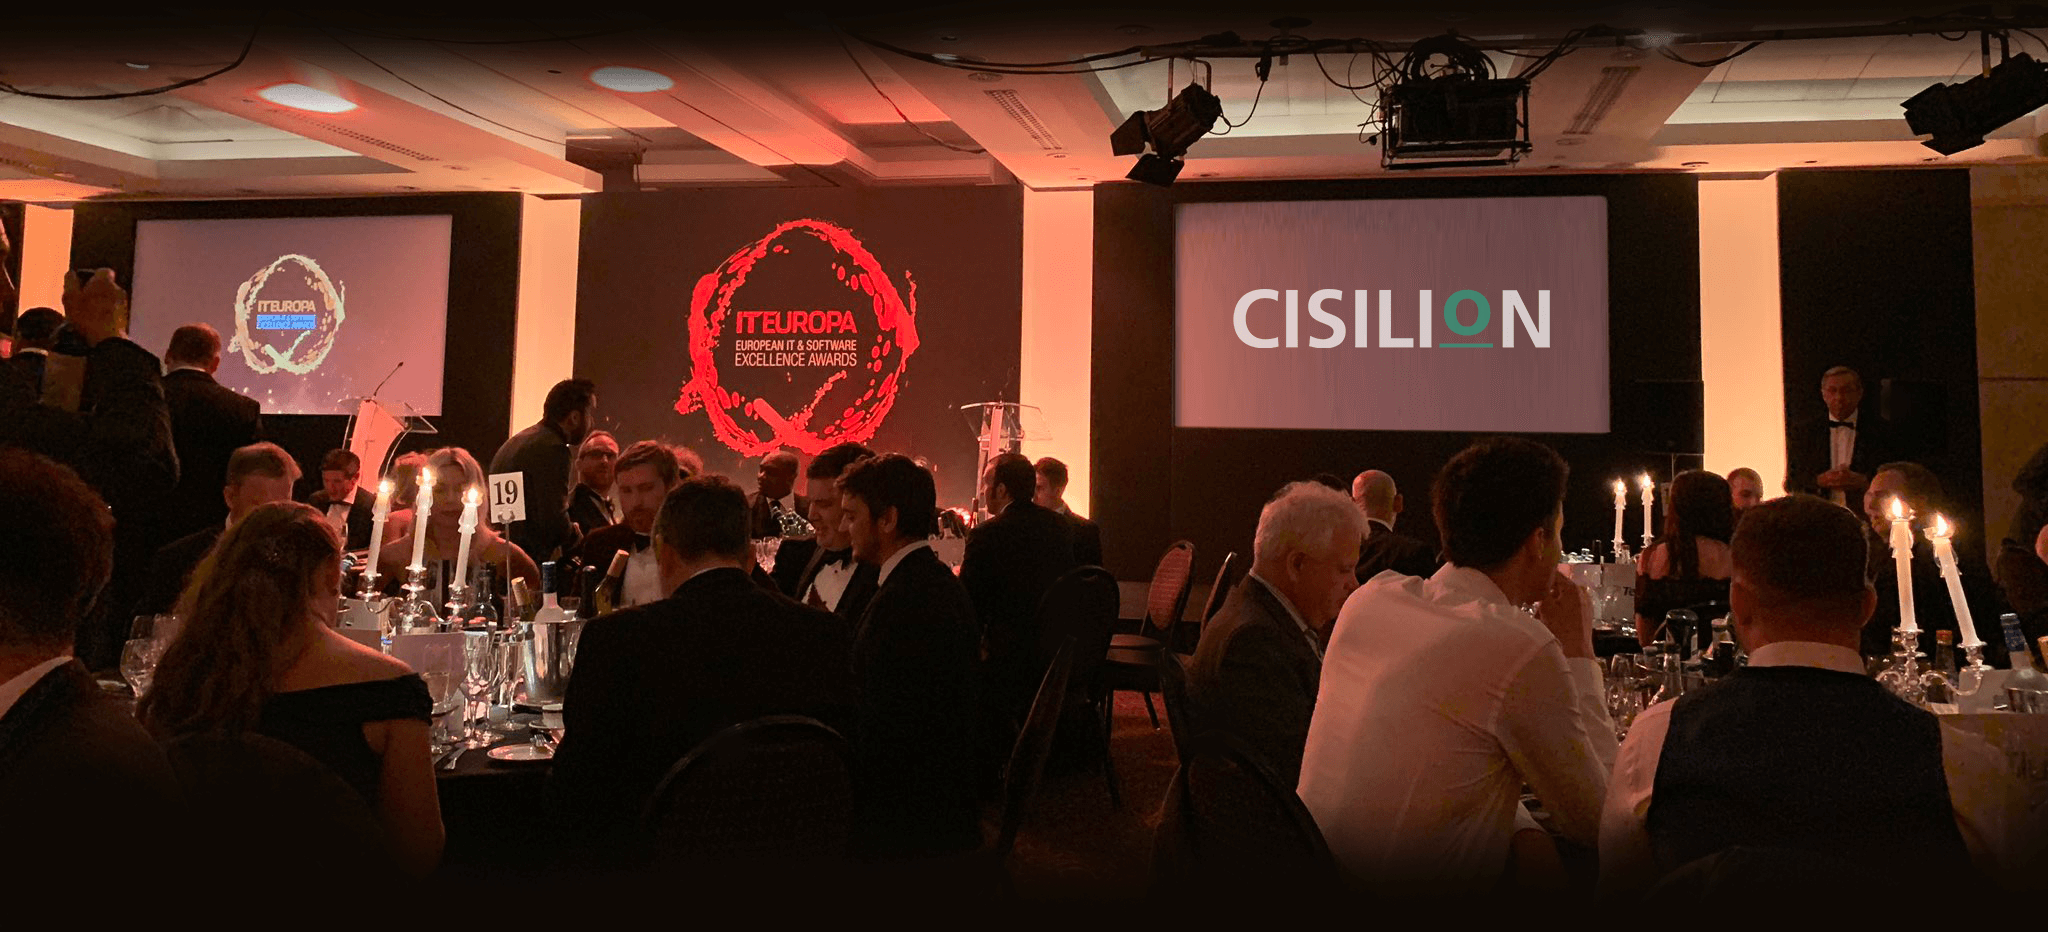 Cisilion Win IT Europa Best Enterprise Solution Award